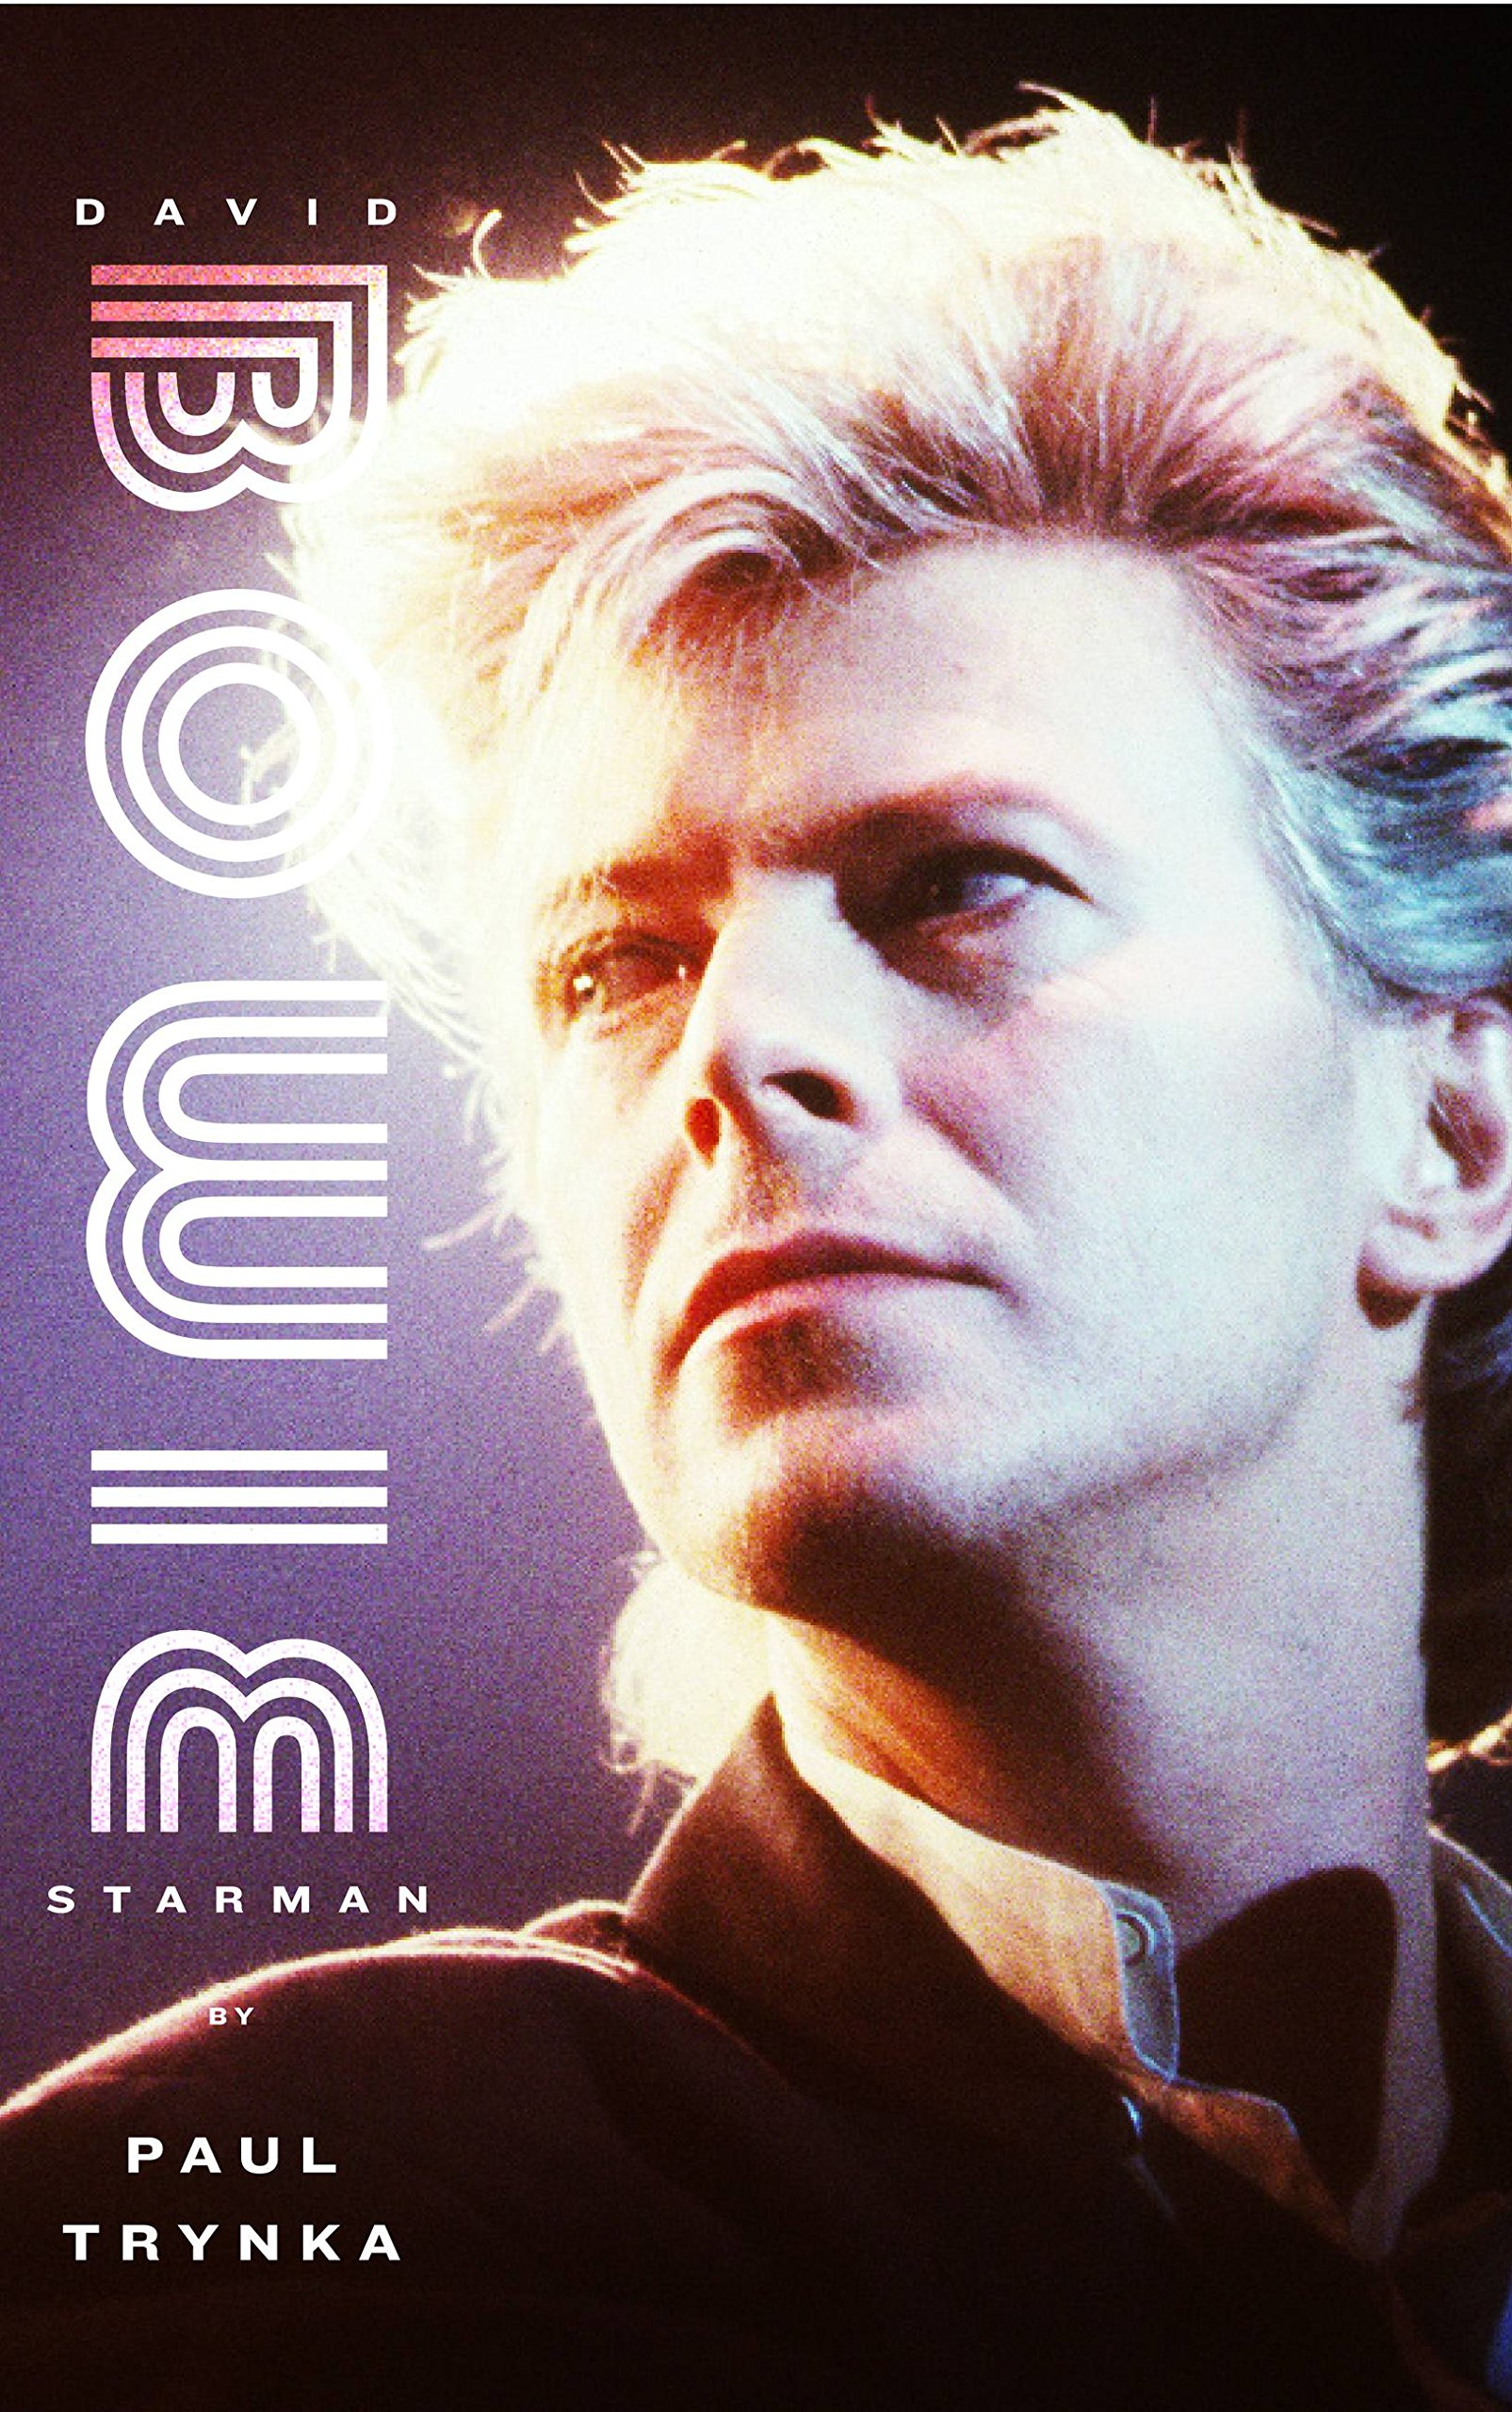 David Bowie: Starman ebook $2.99 on Kindle